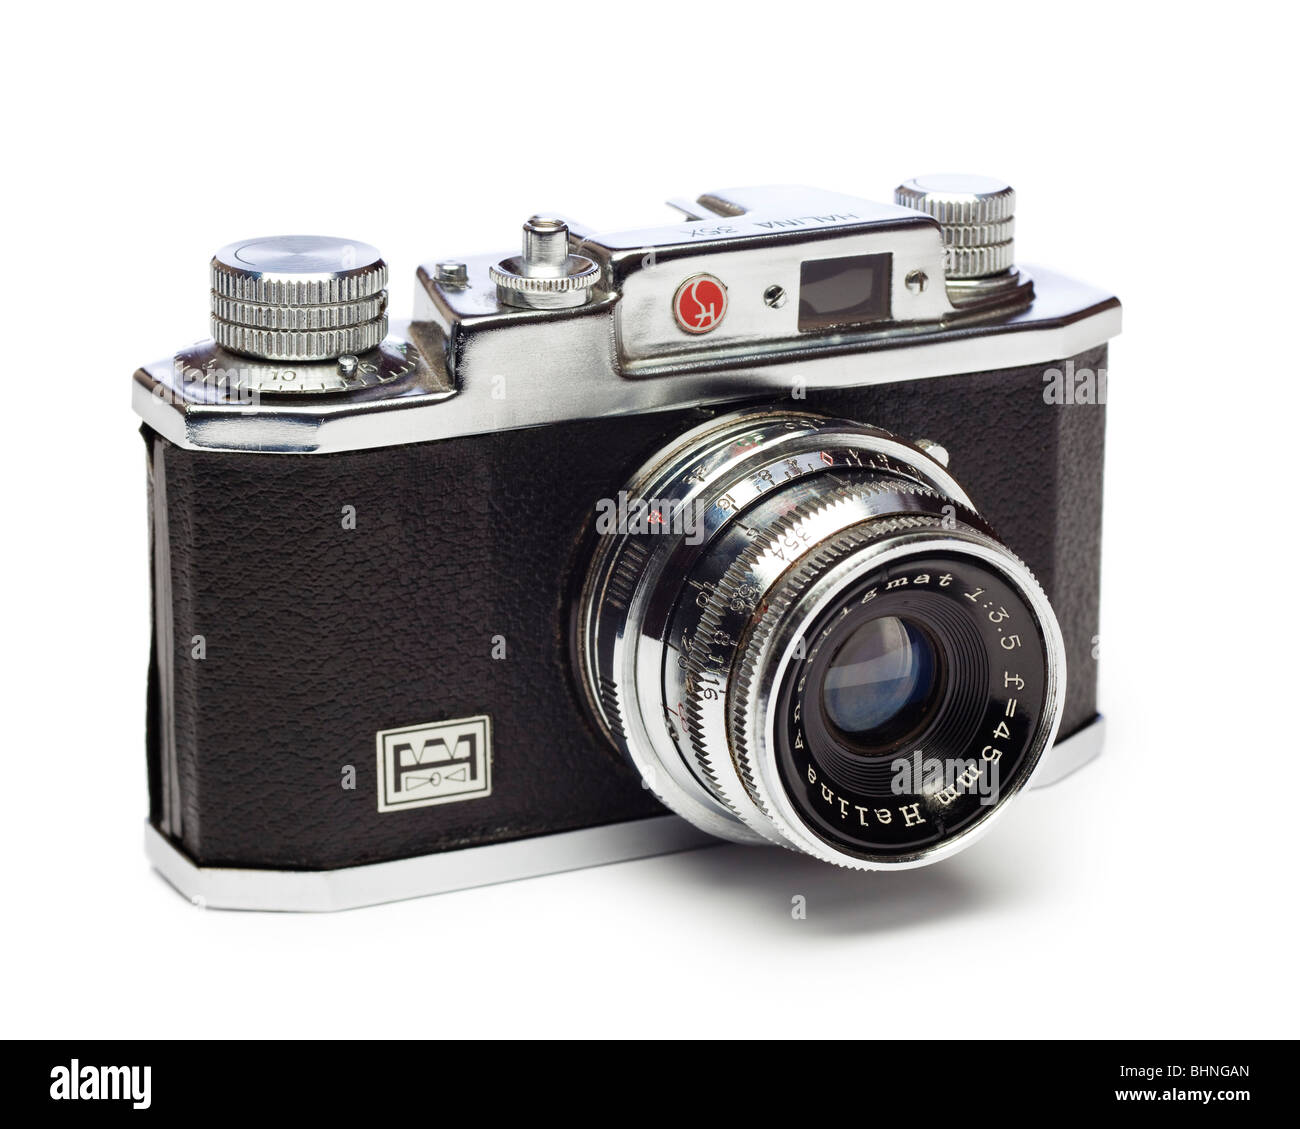 Old vintage camera - Halina 35x optique appareil photo Banque D'Images